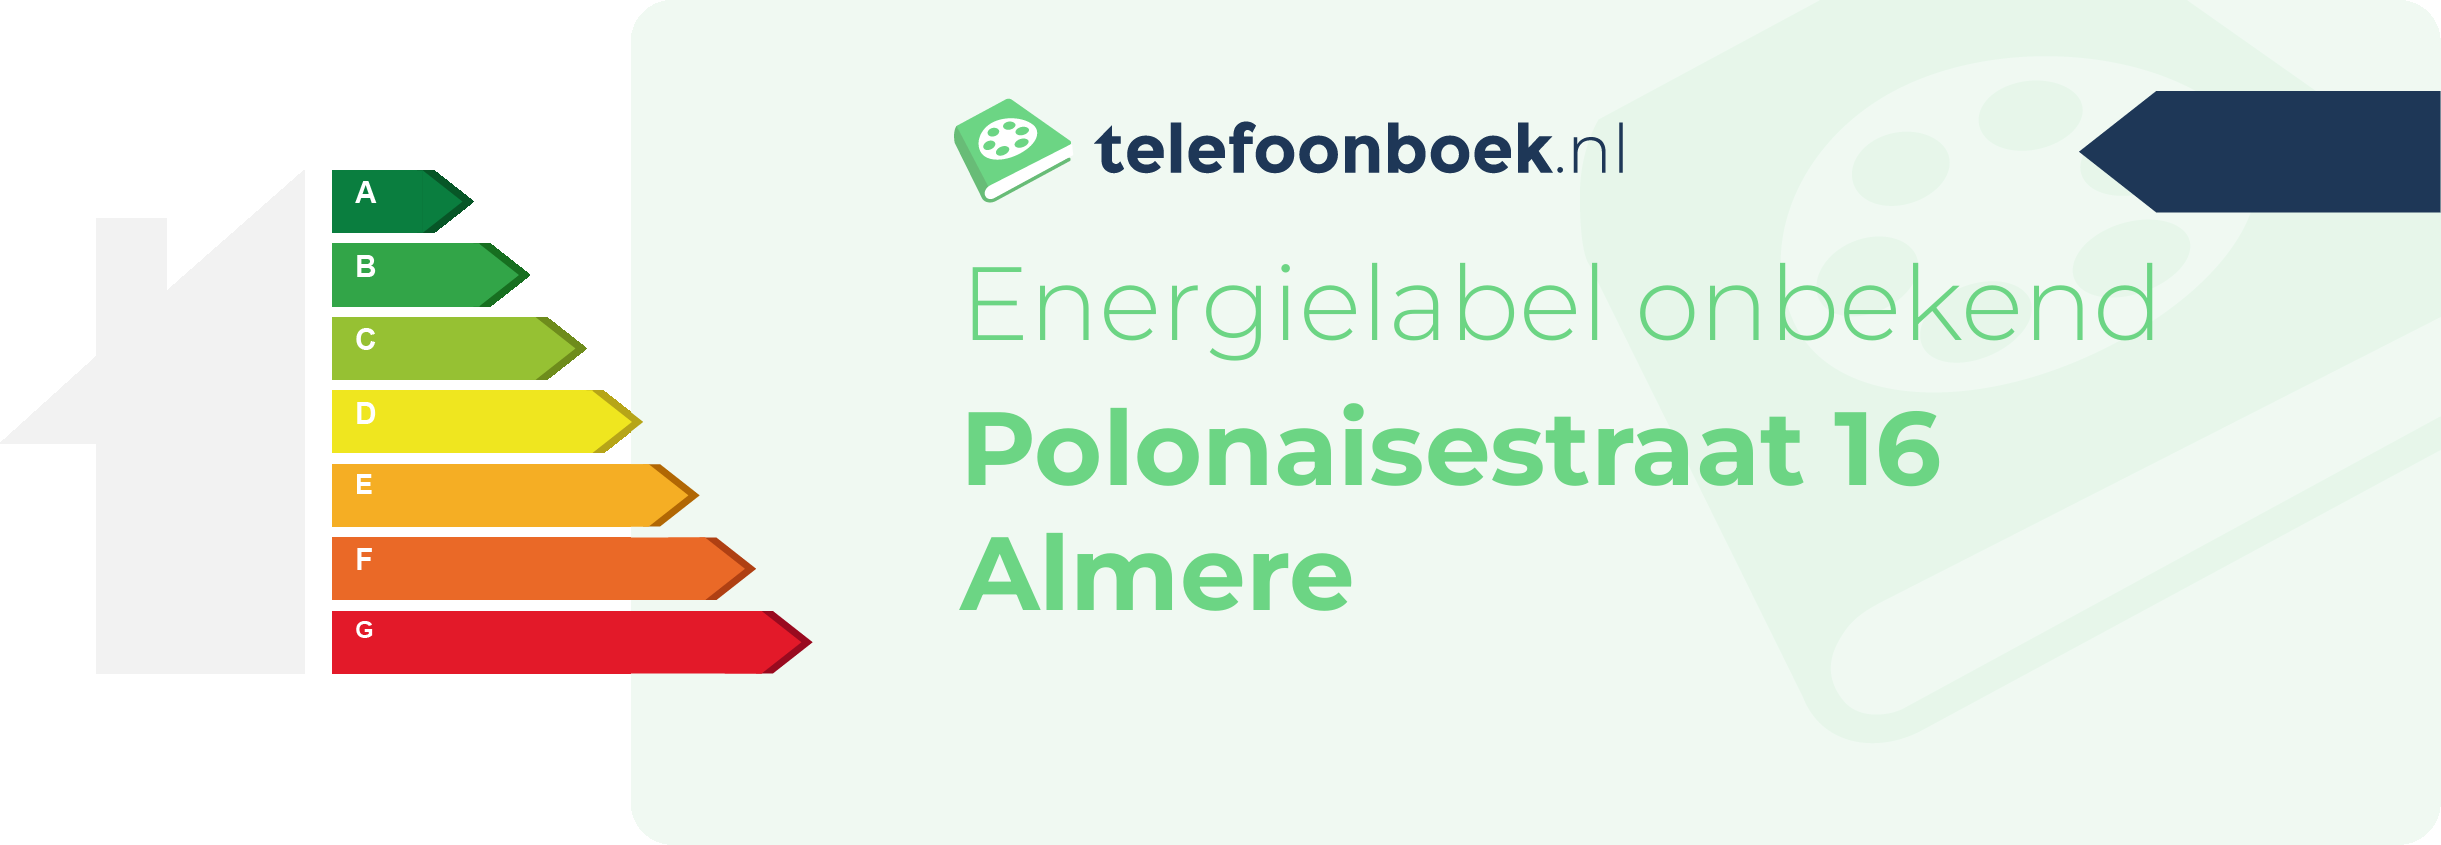 Energielabel Polonaisestraat 16 Almere